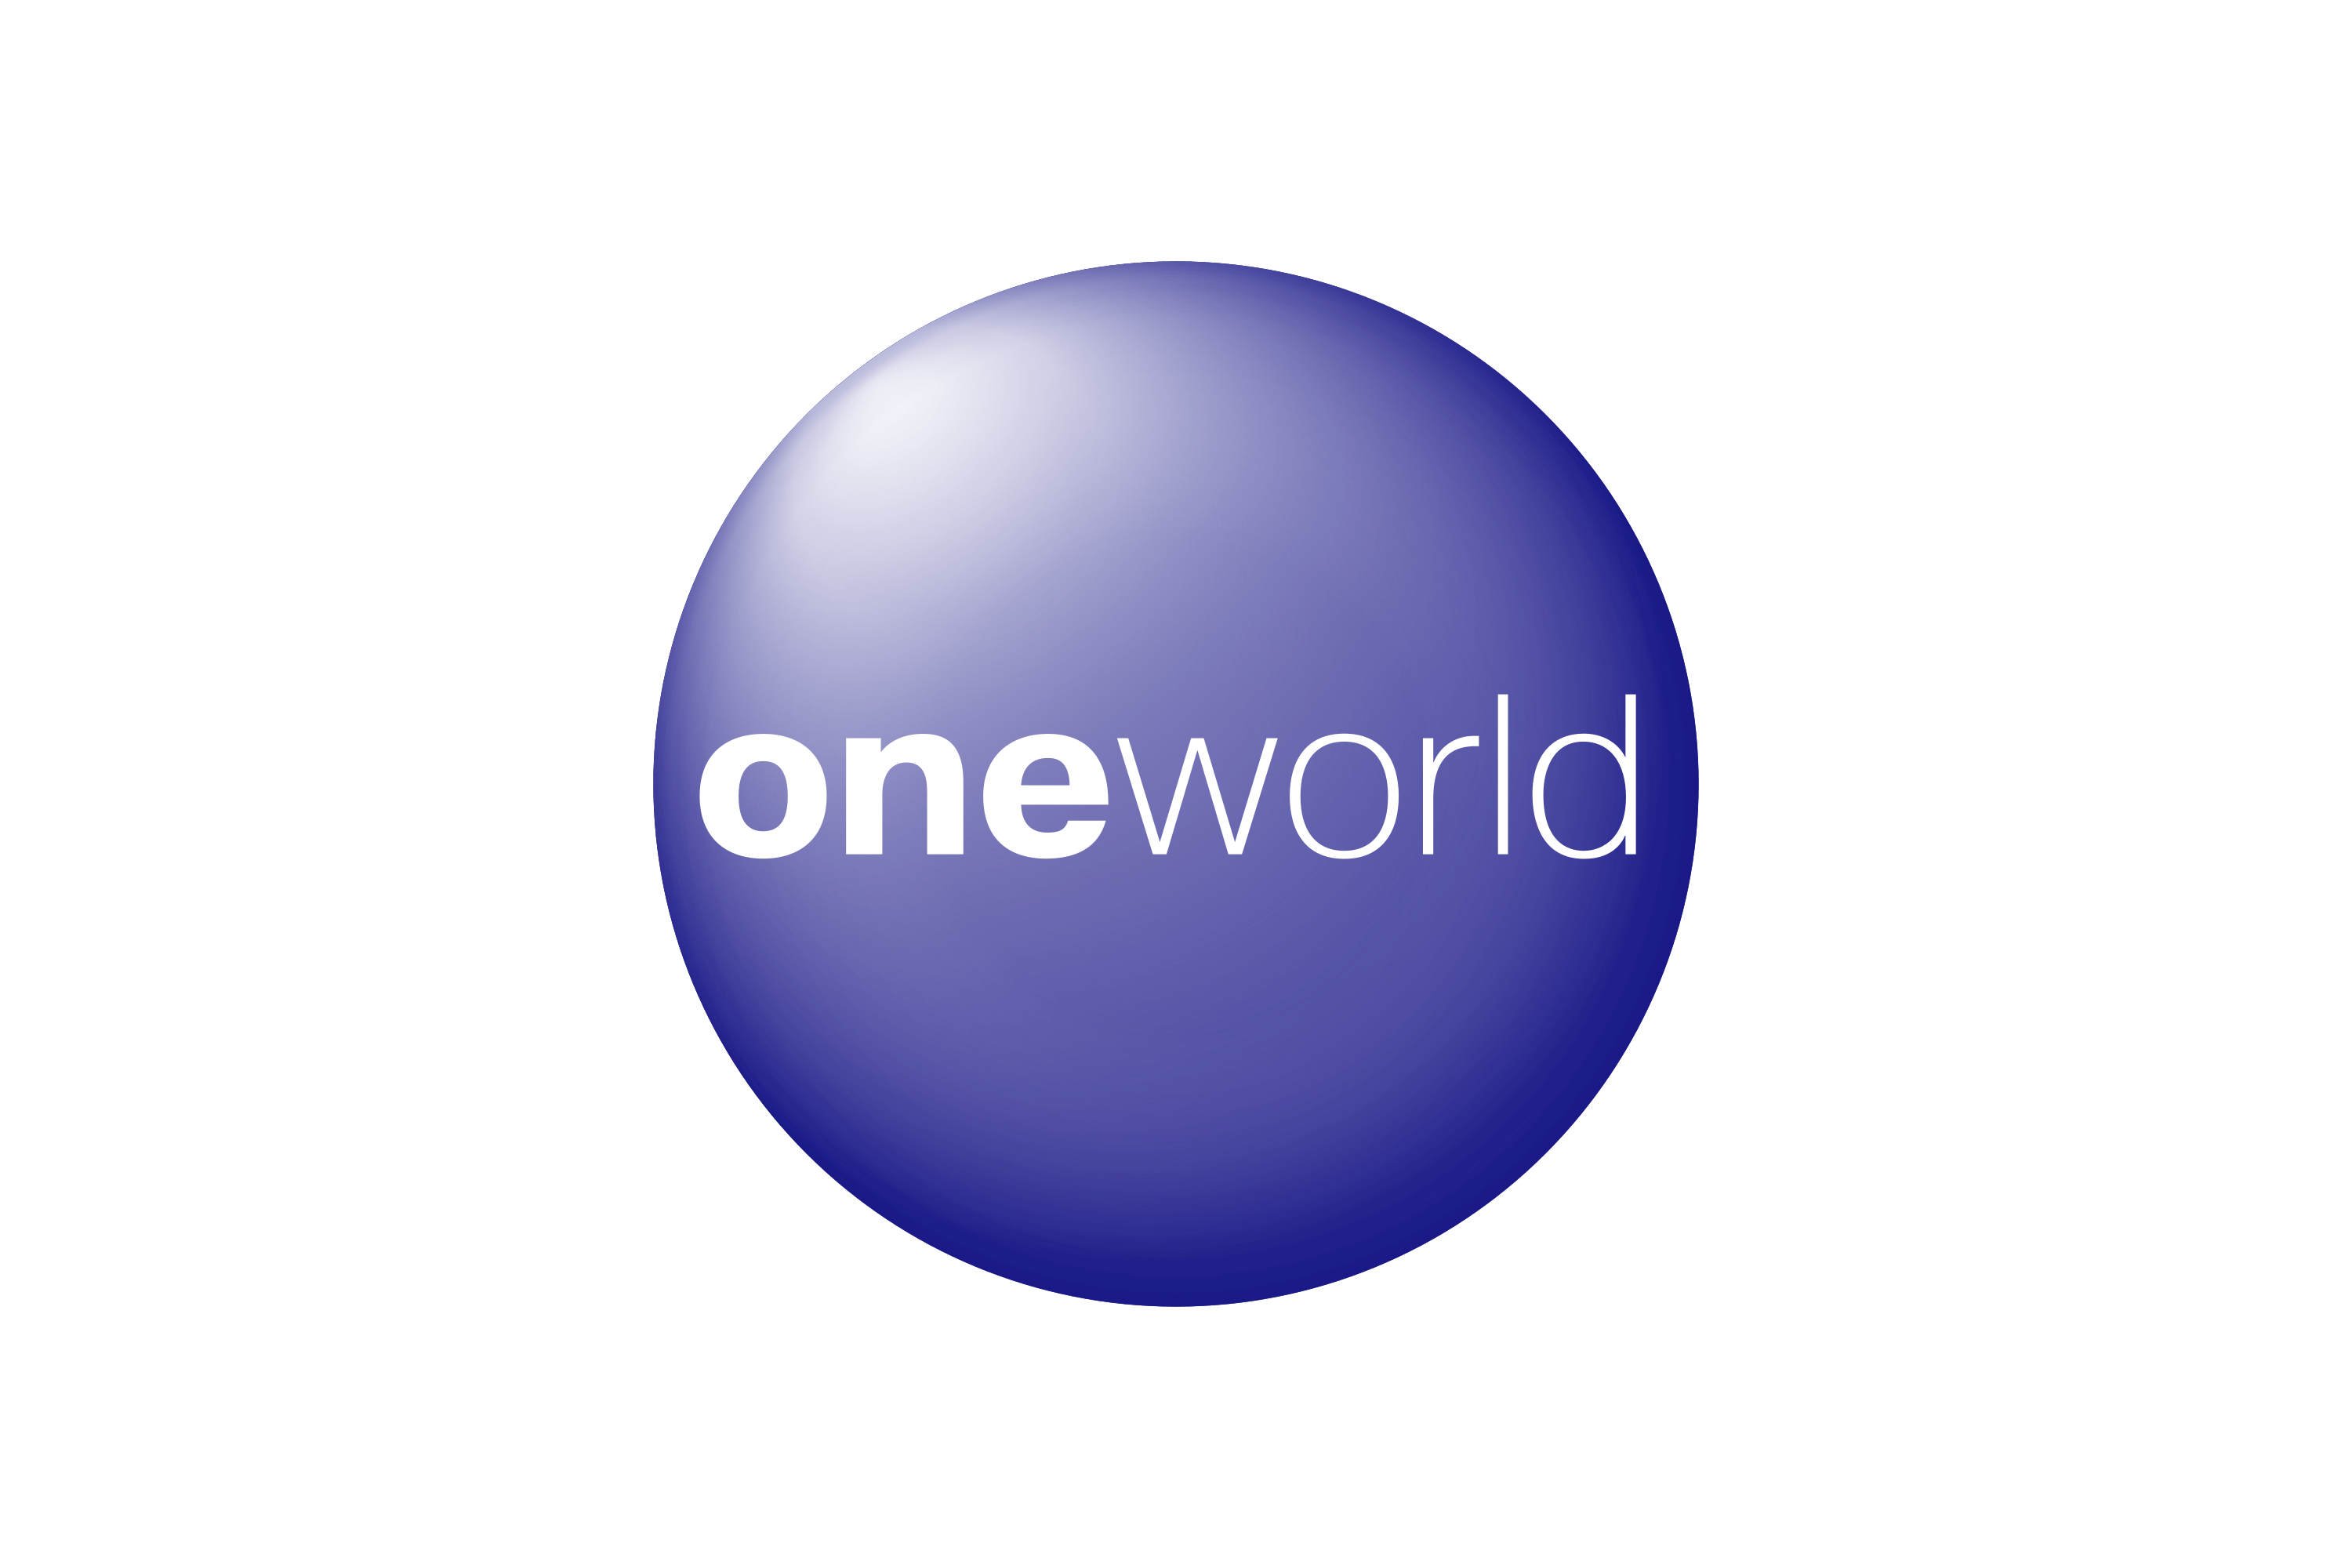 Download Oneworld Logo in SVG Vector or PNG File Format - Logo.wine